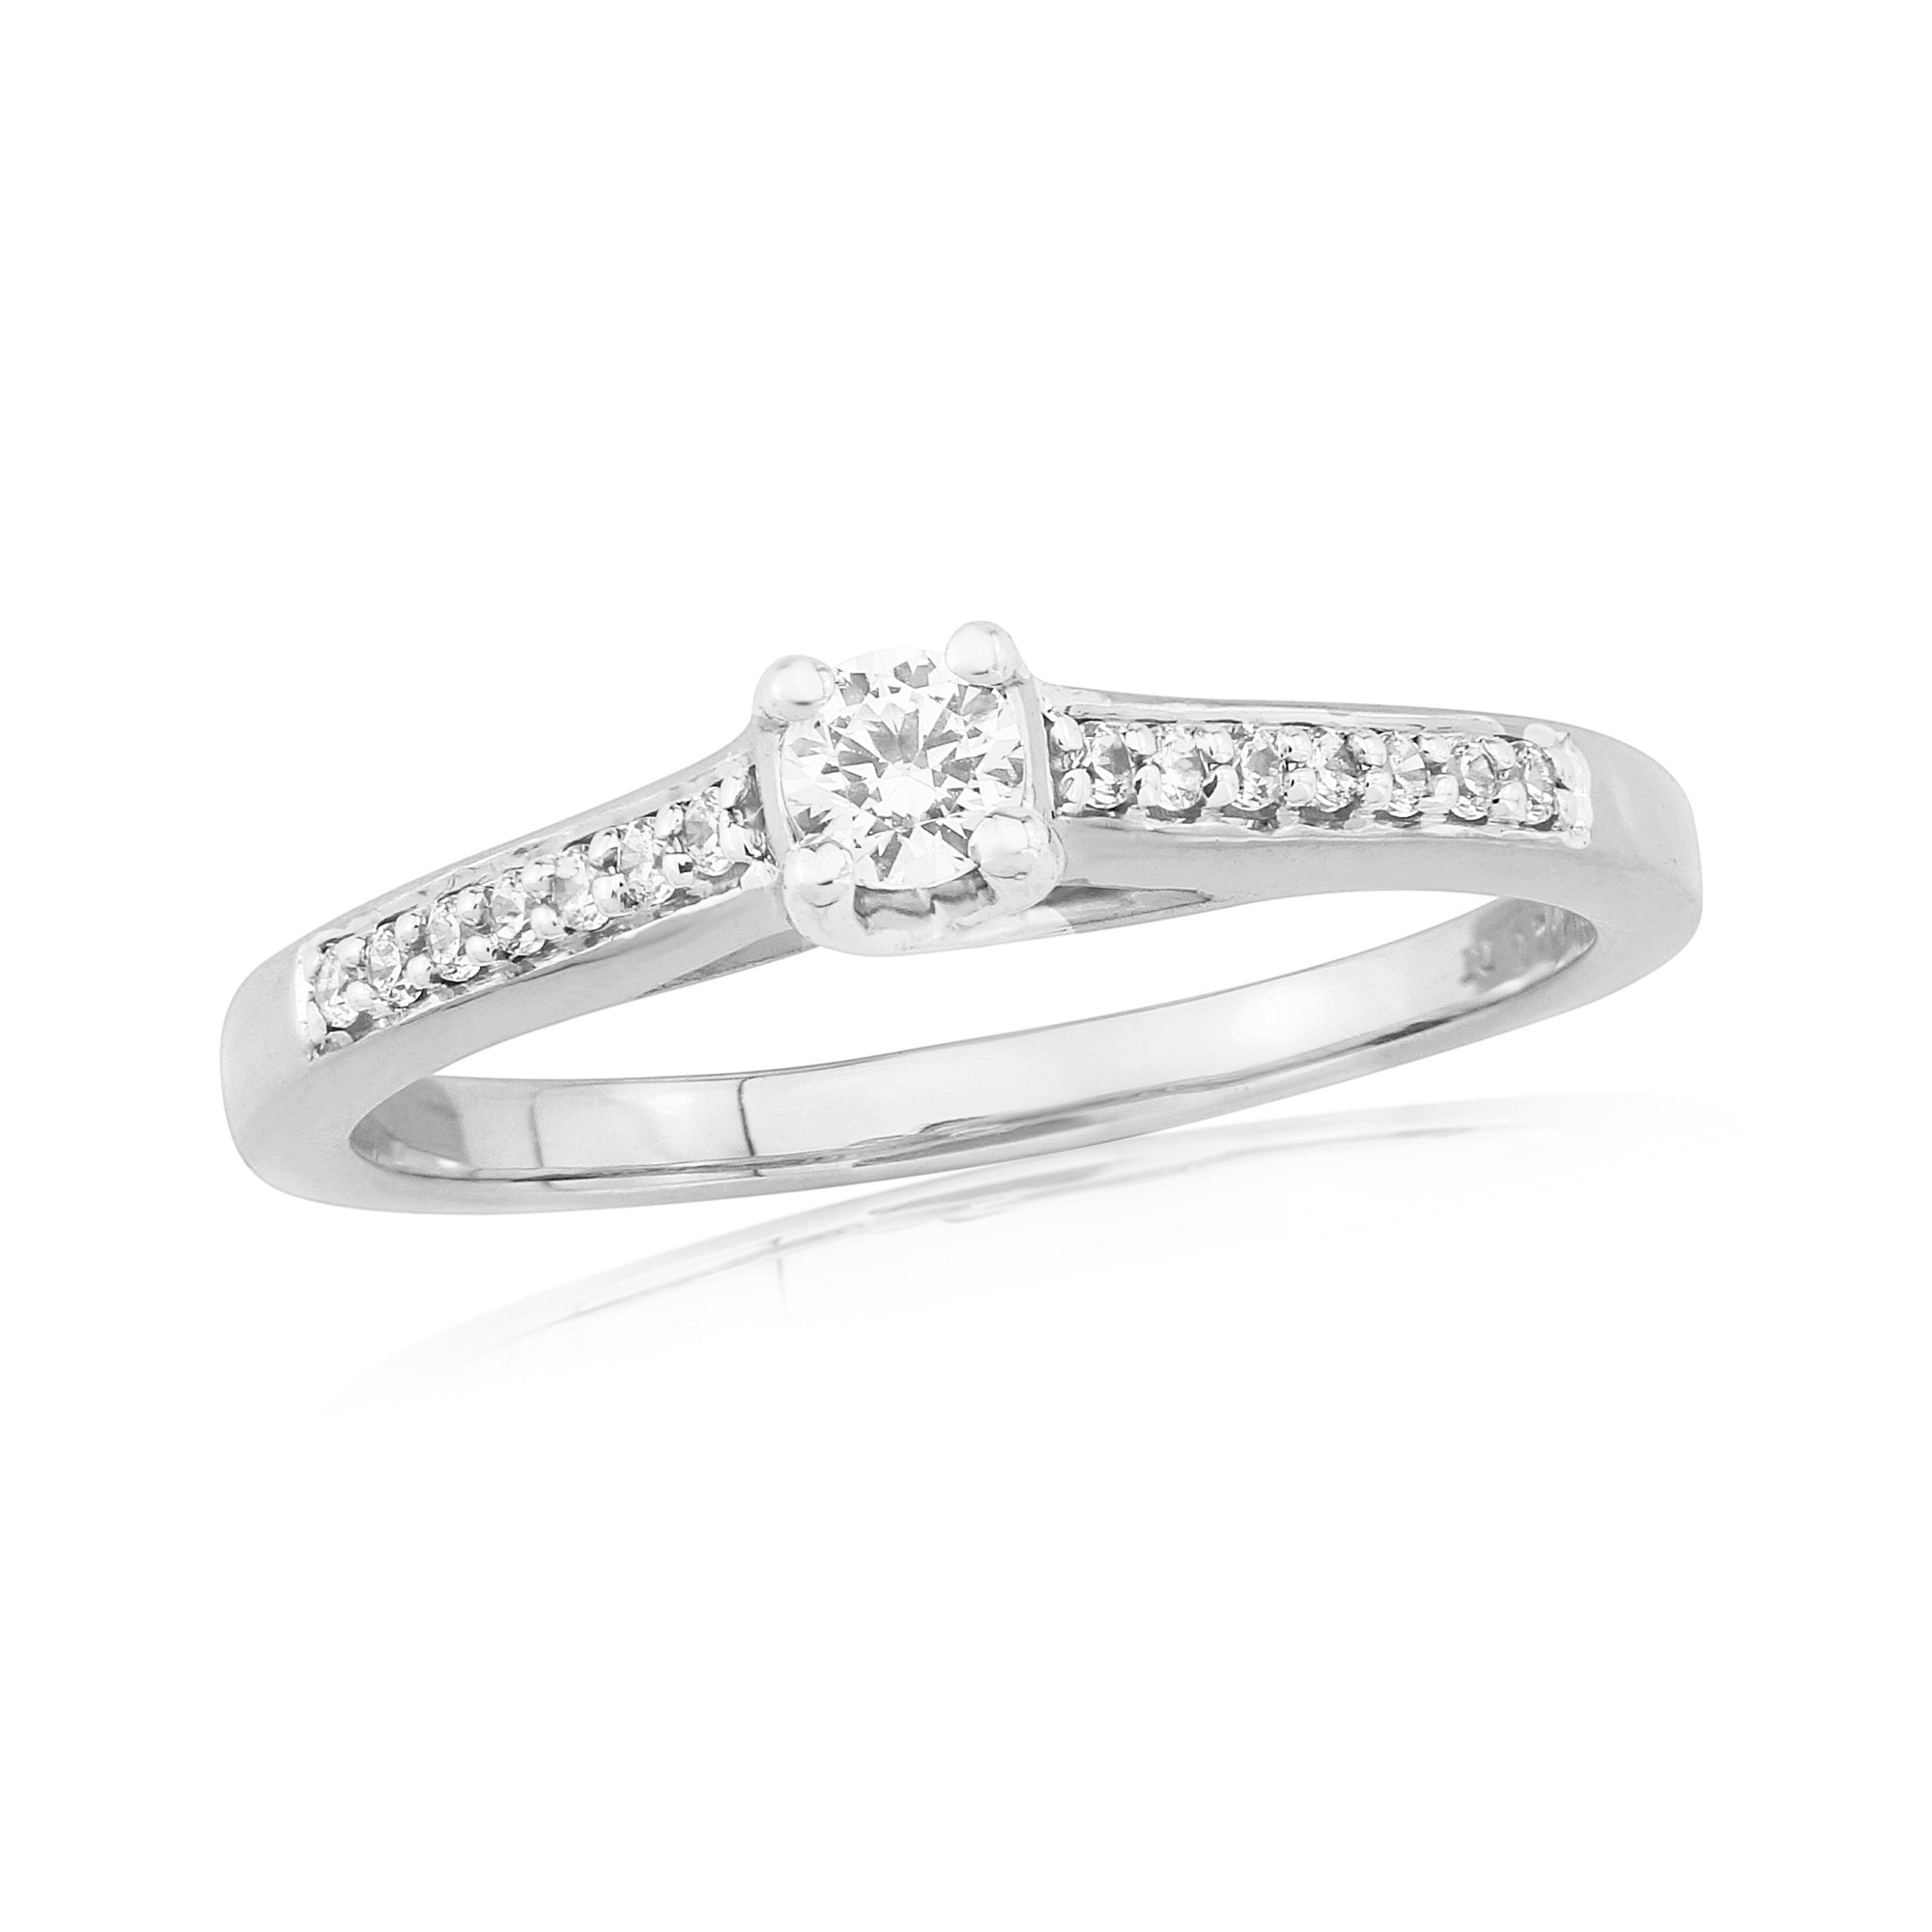 9ct white gold single stone diamond ring with diamond set shoulders 0.20ct